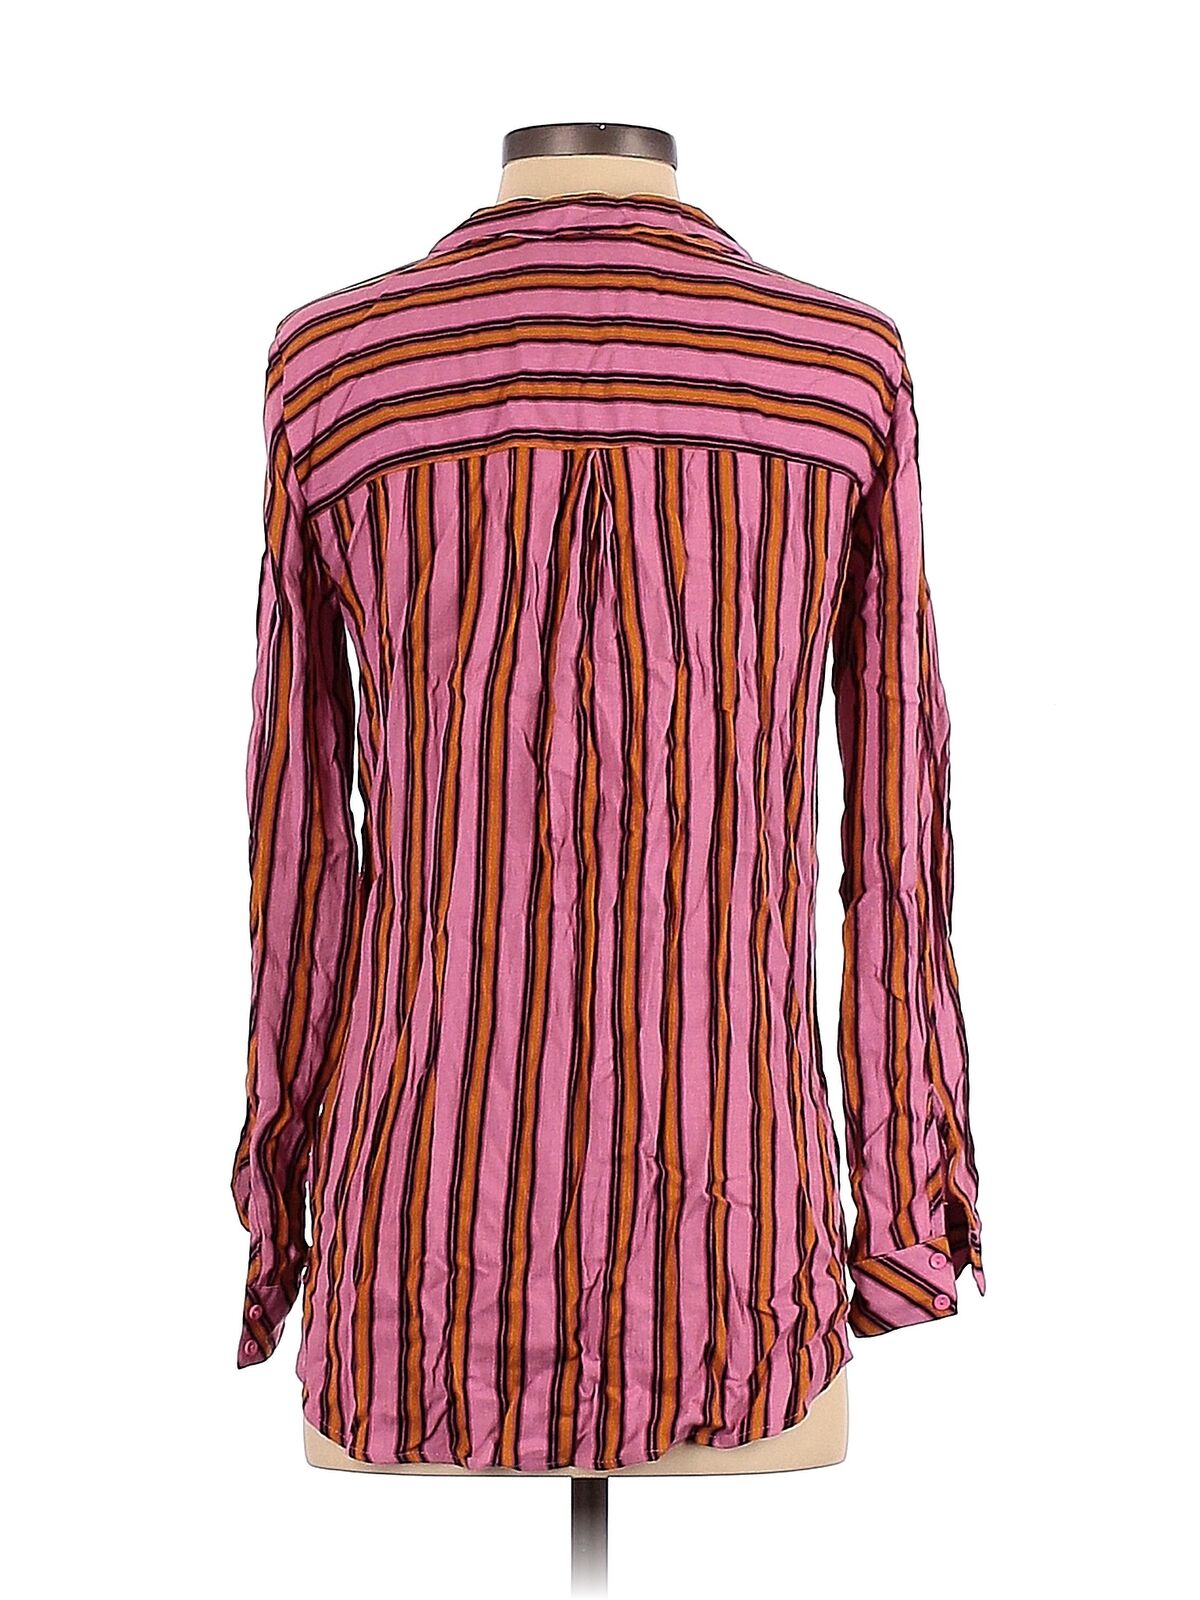 Zara TRF Women Pink Long Sleeve Blouse XS - image 2